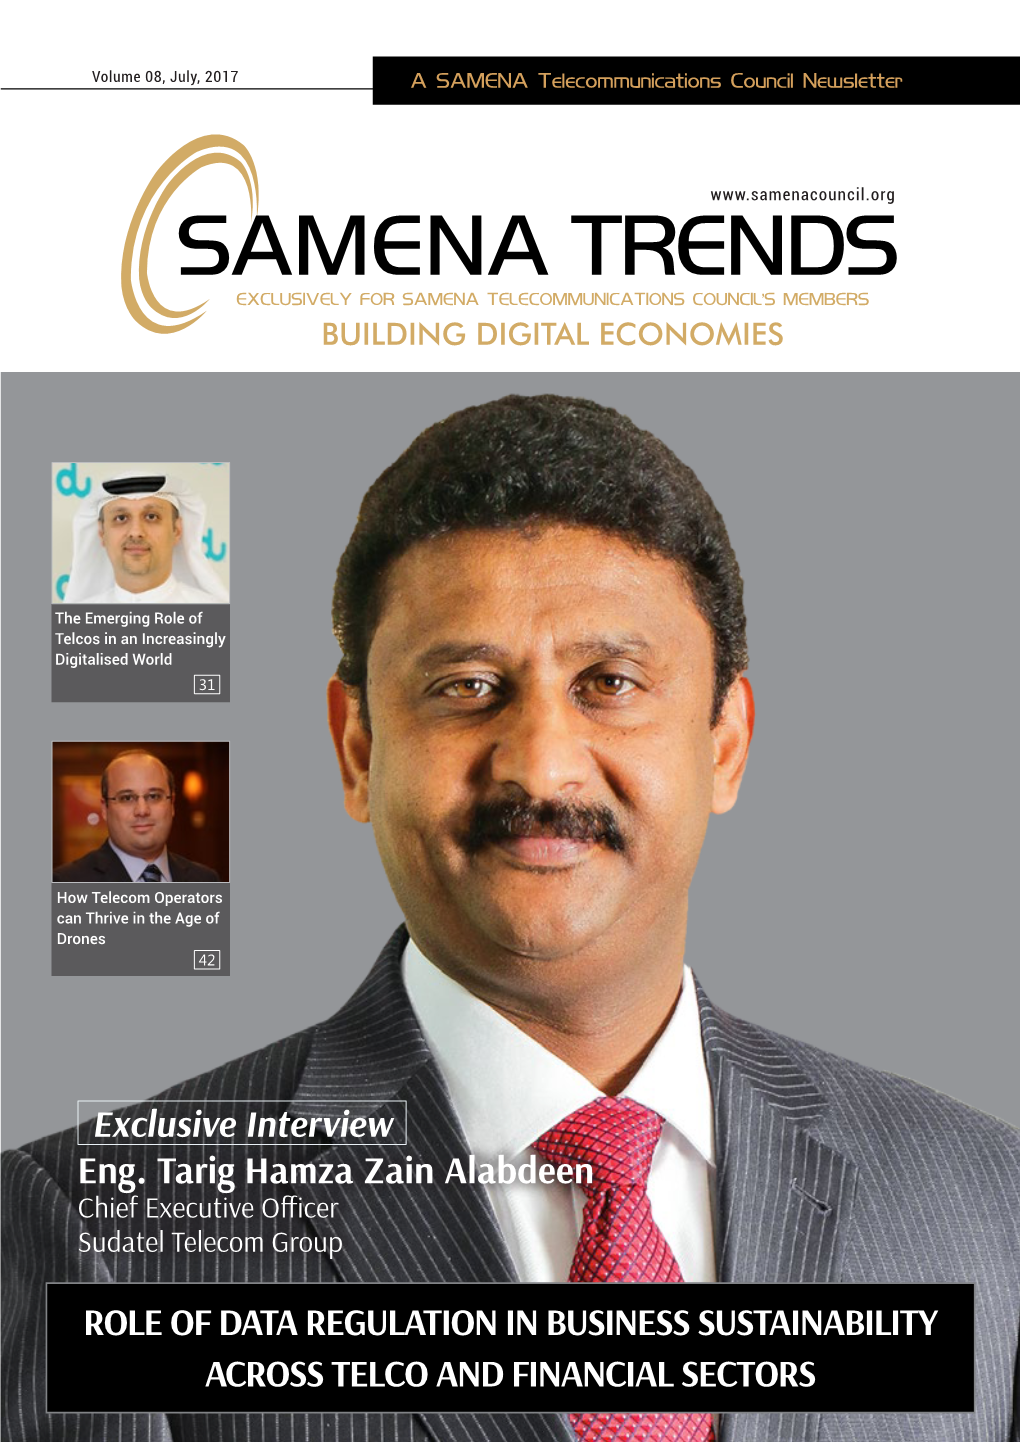 Samena Trends Exclusively for Samena Telecommunications Council's Members Building Digital Economies